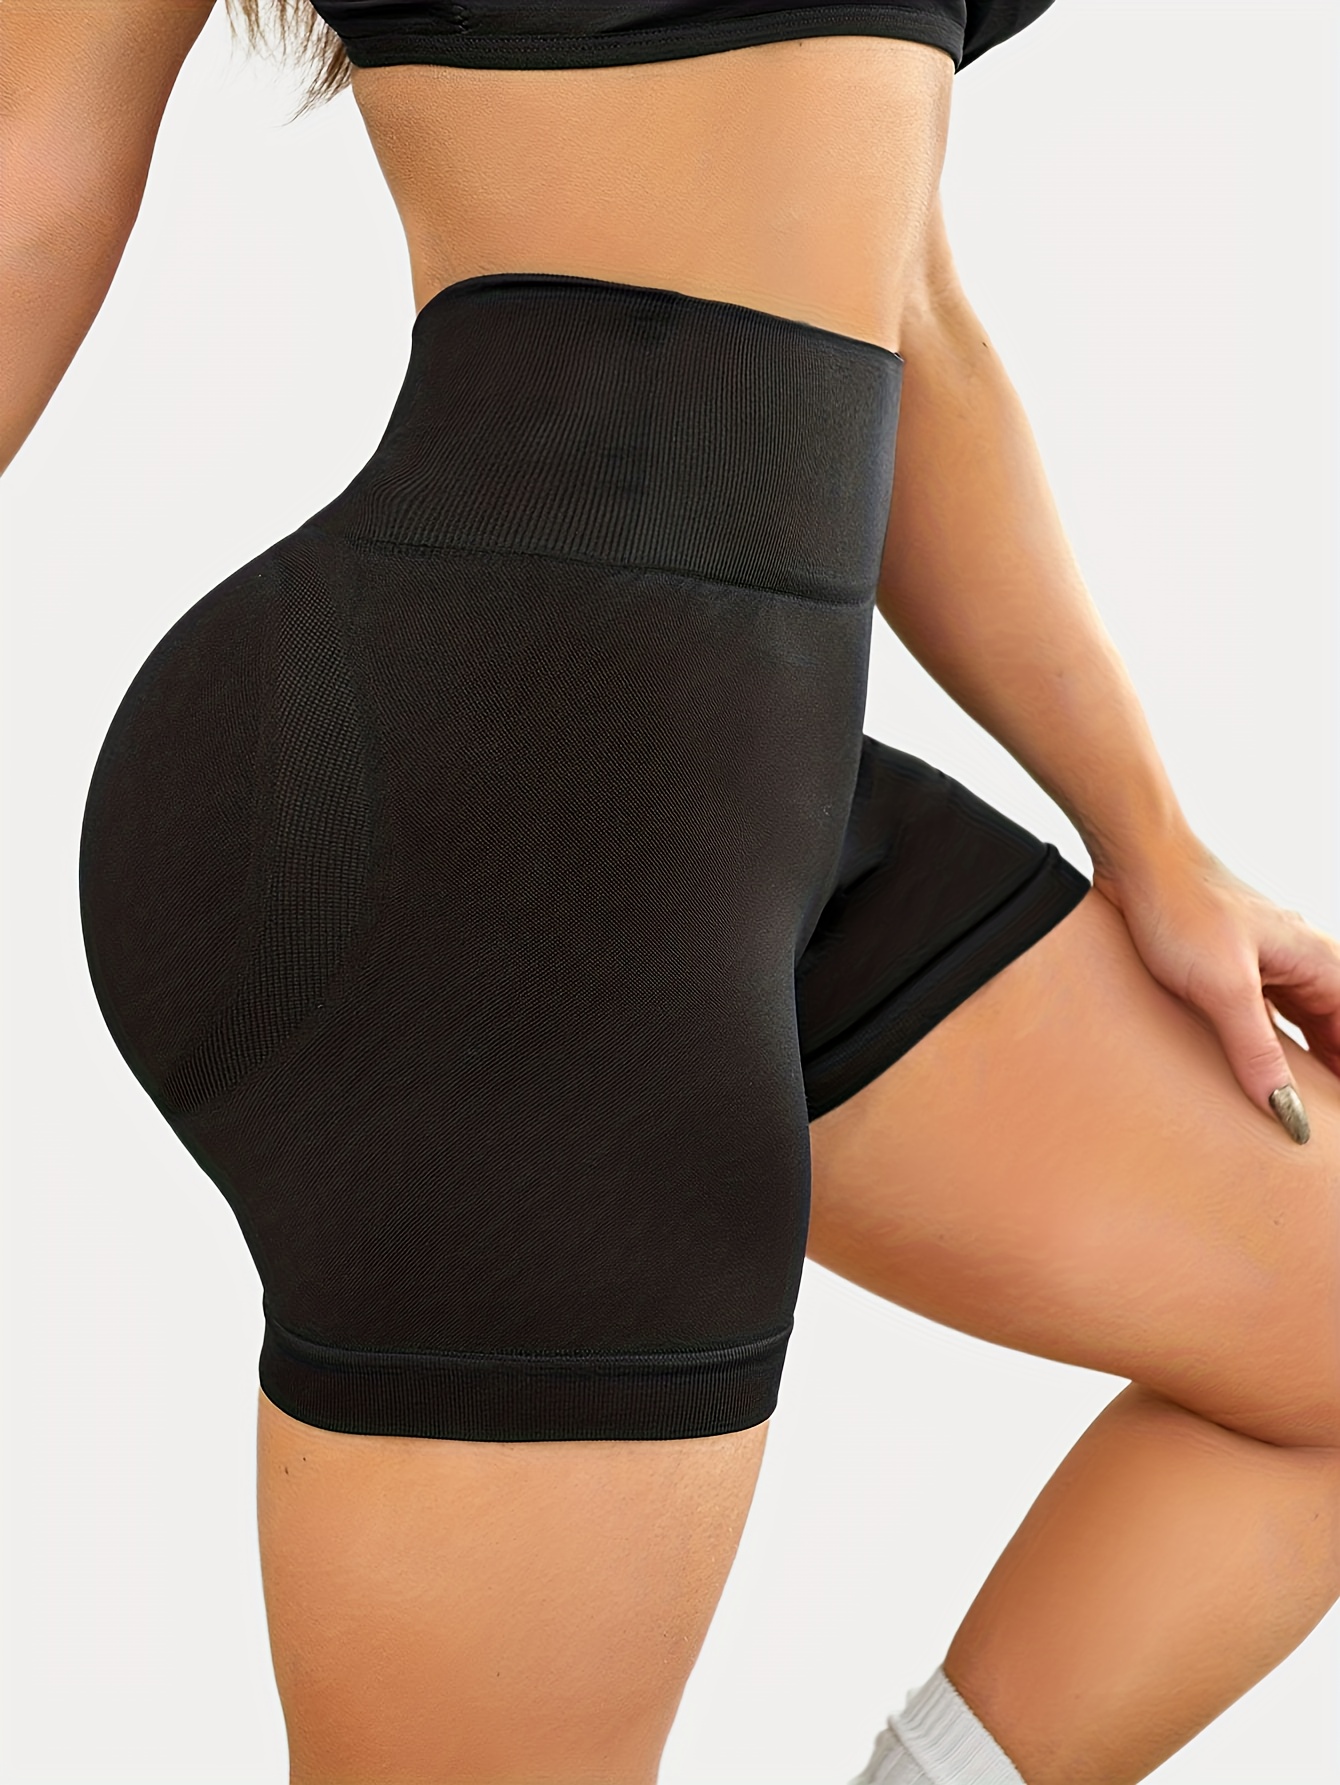 Seamless short jumpsuit - Women's fashion